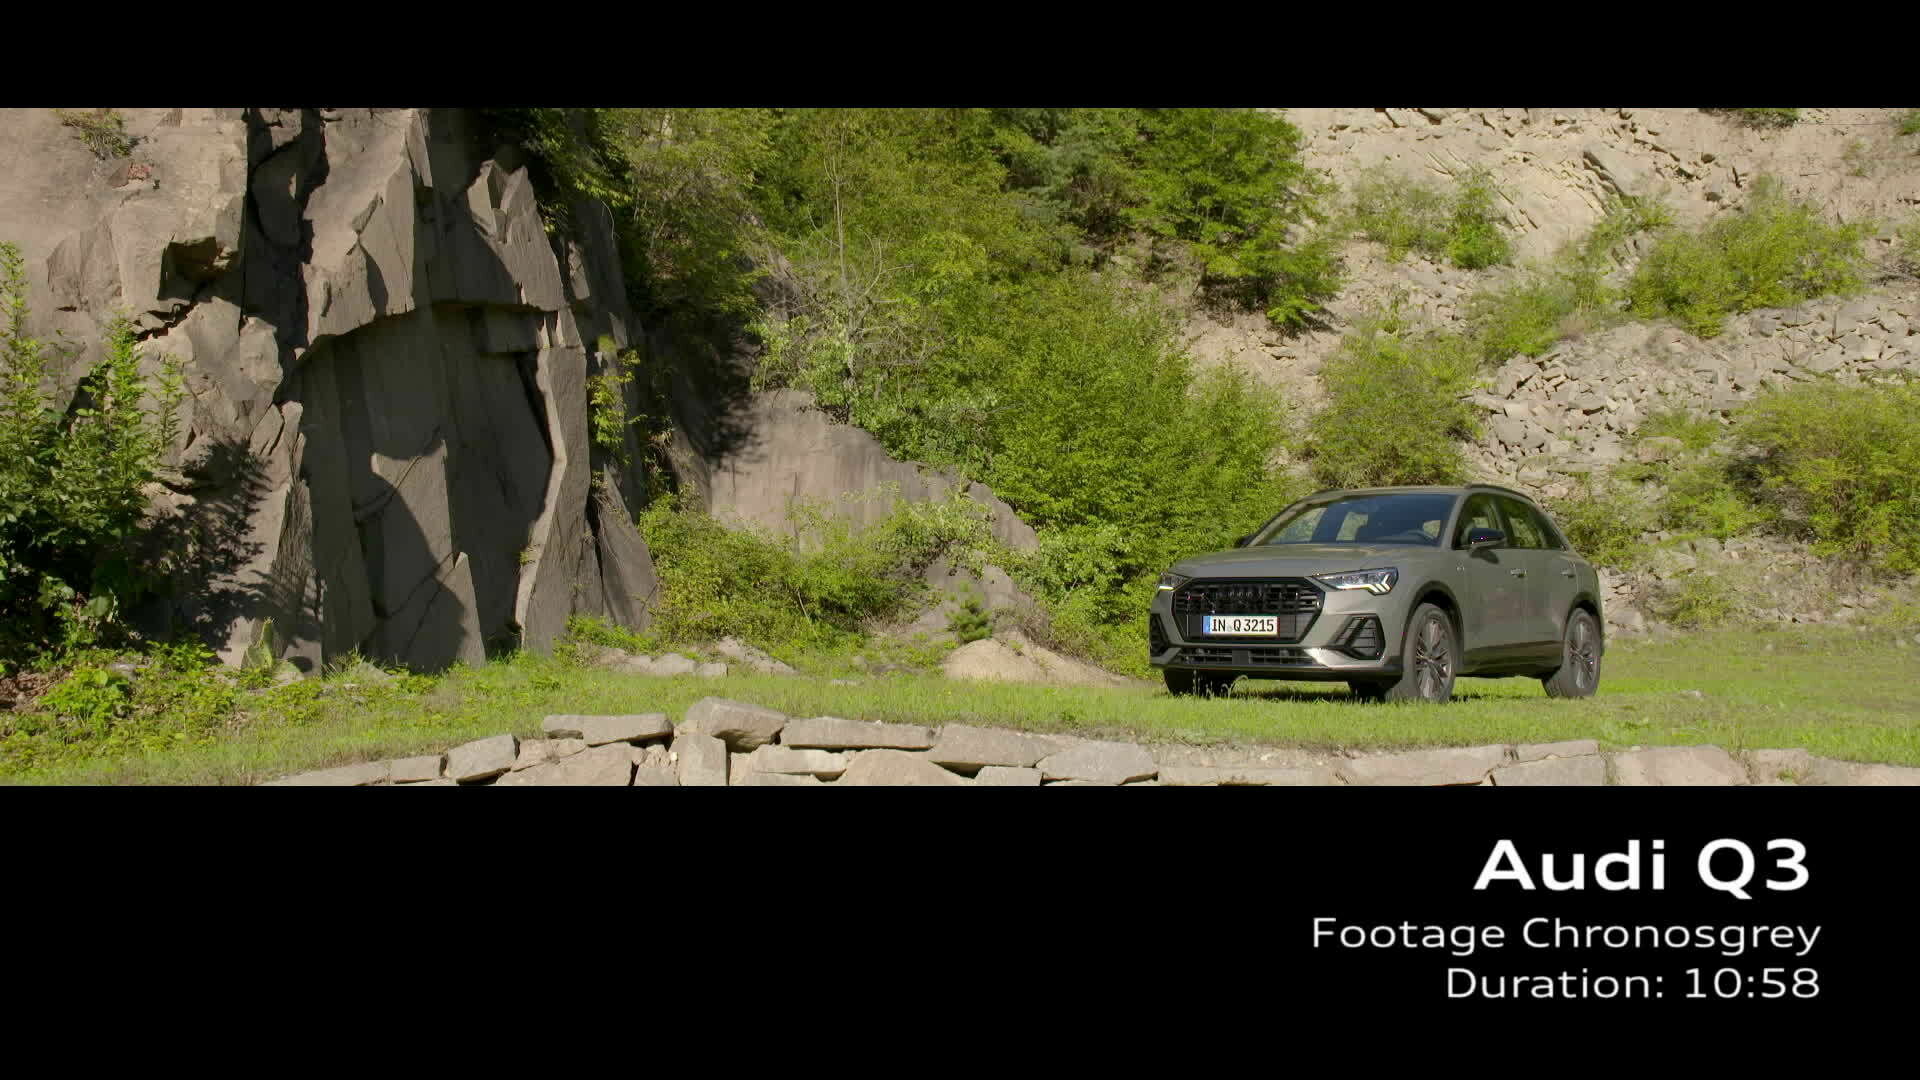 Audi Q3 Footage Chronos grey (2018)